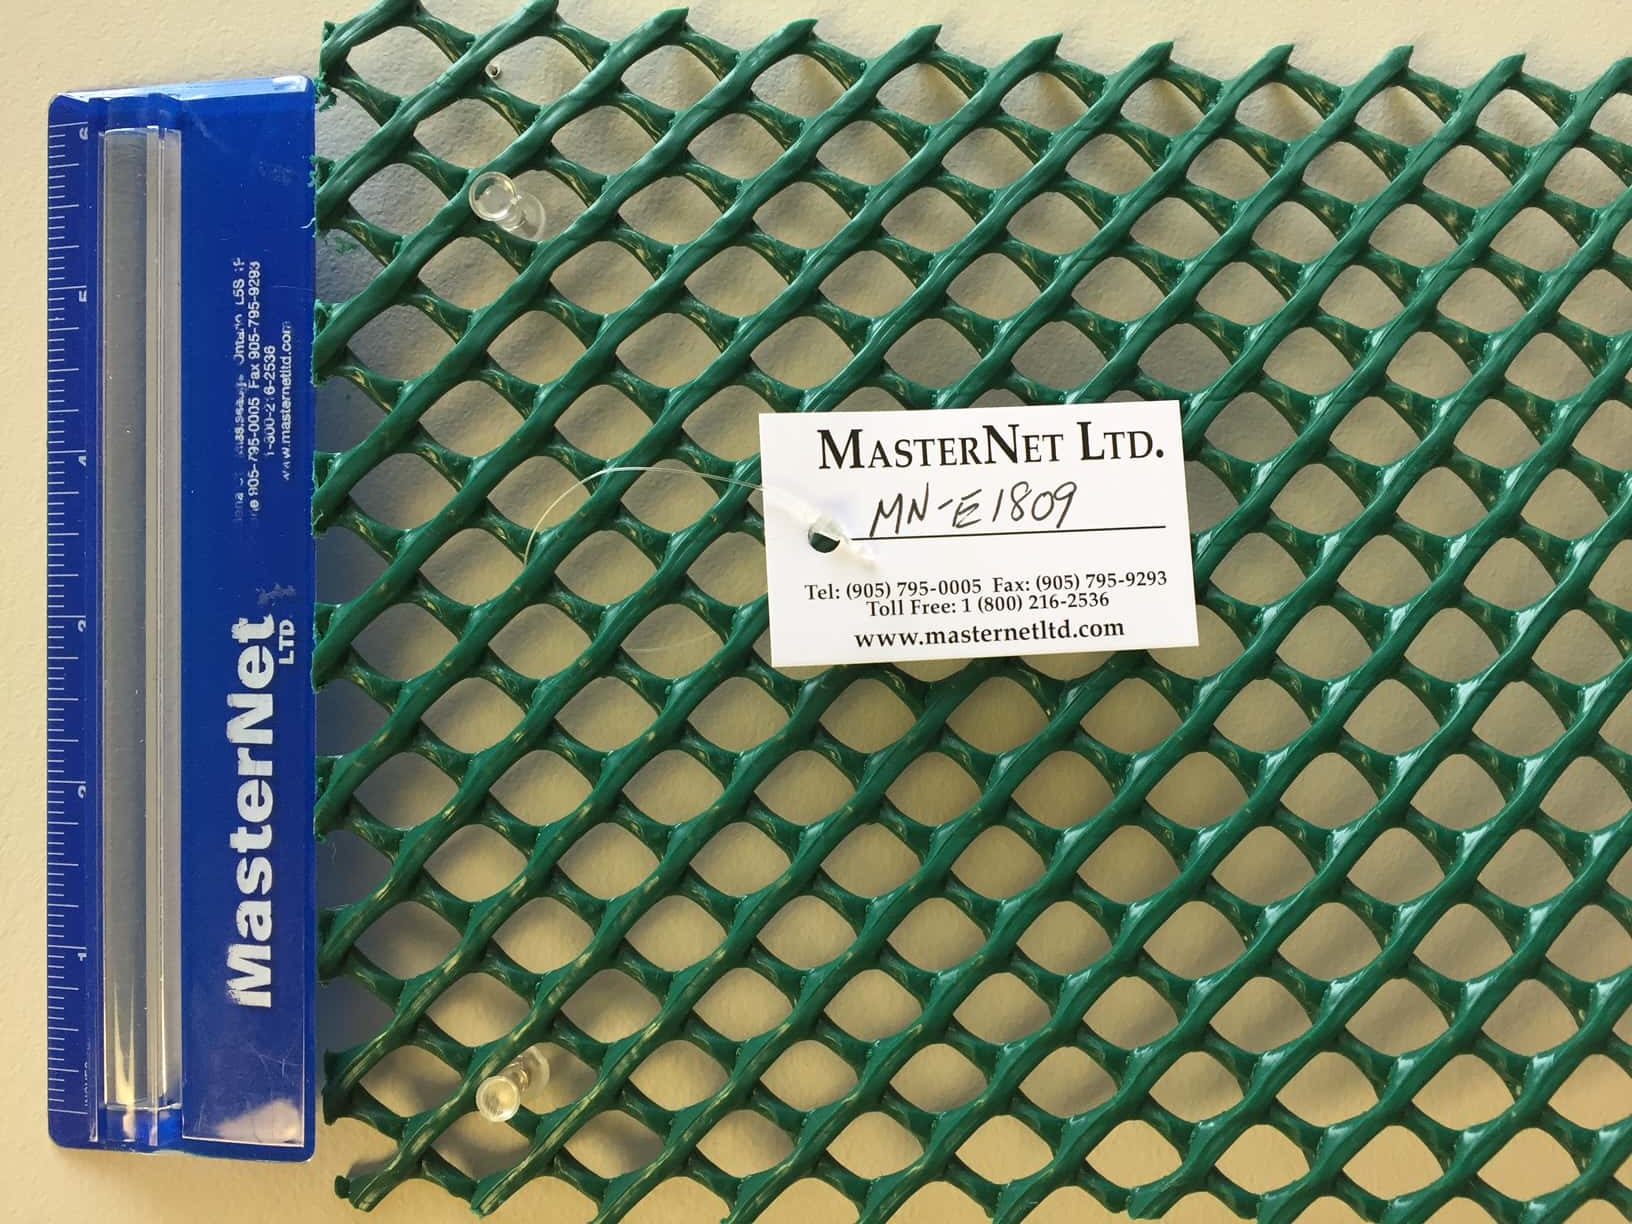 MasterNet product MN-E1809